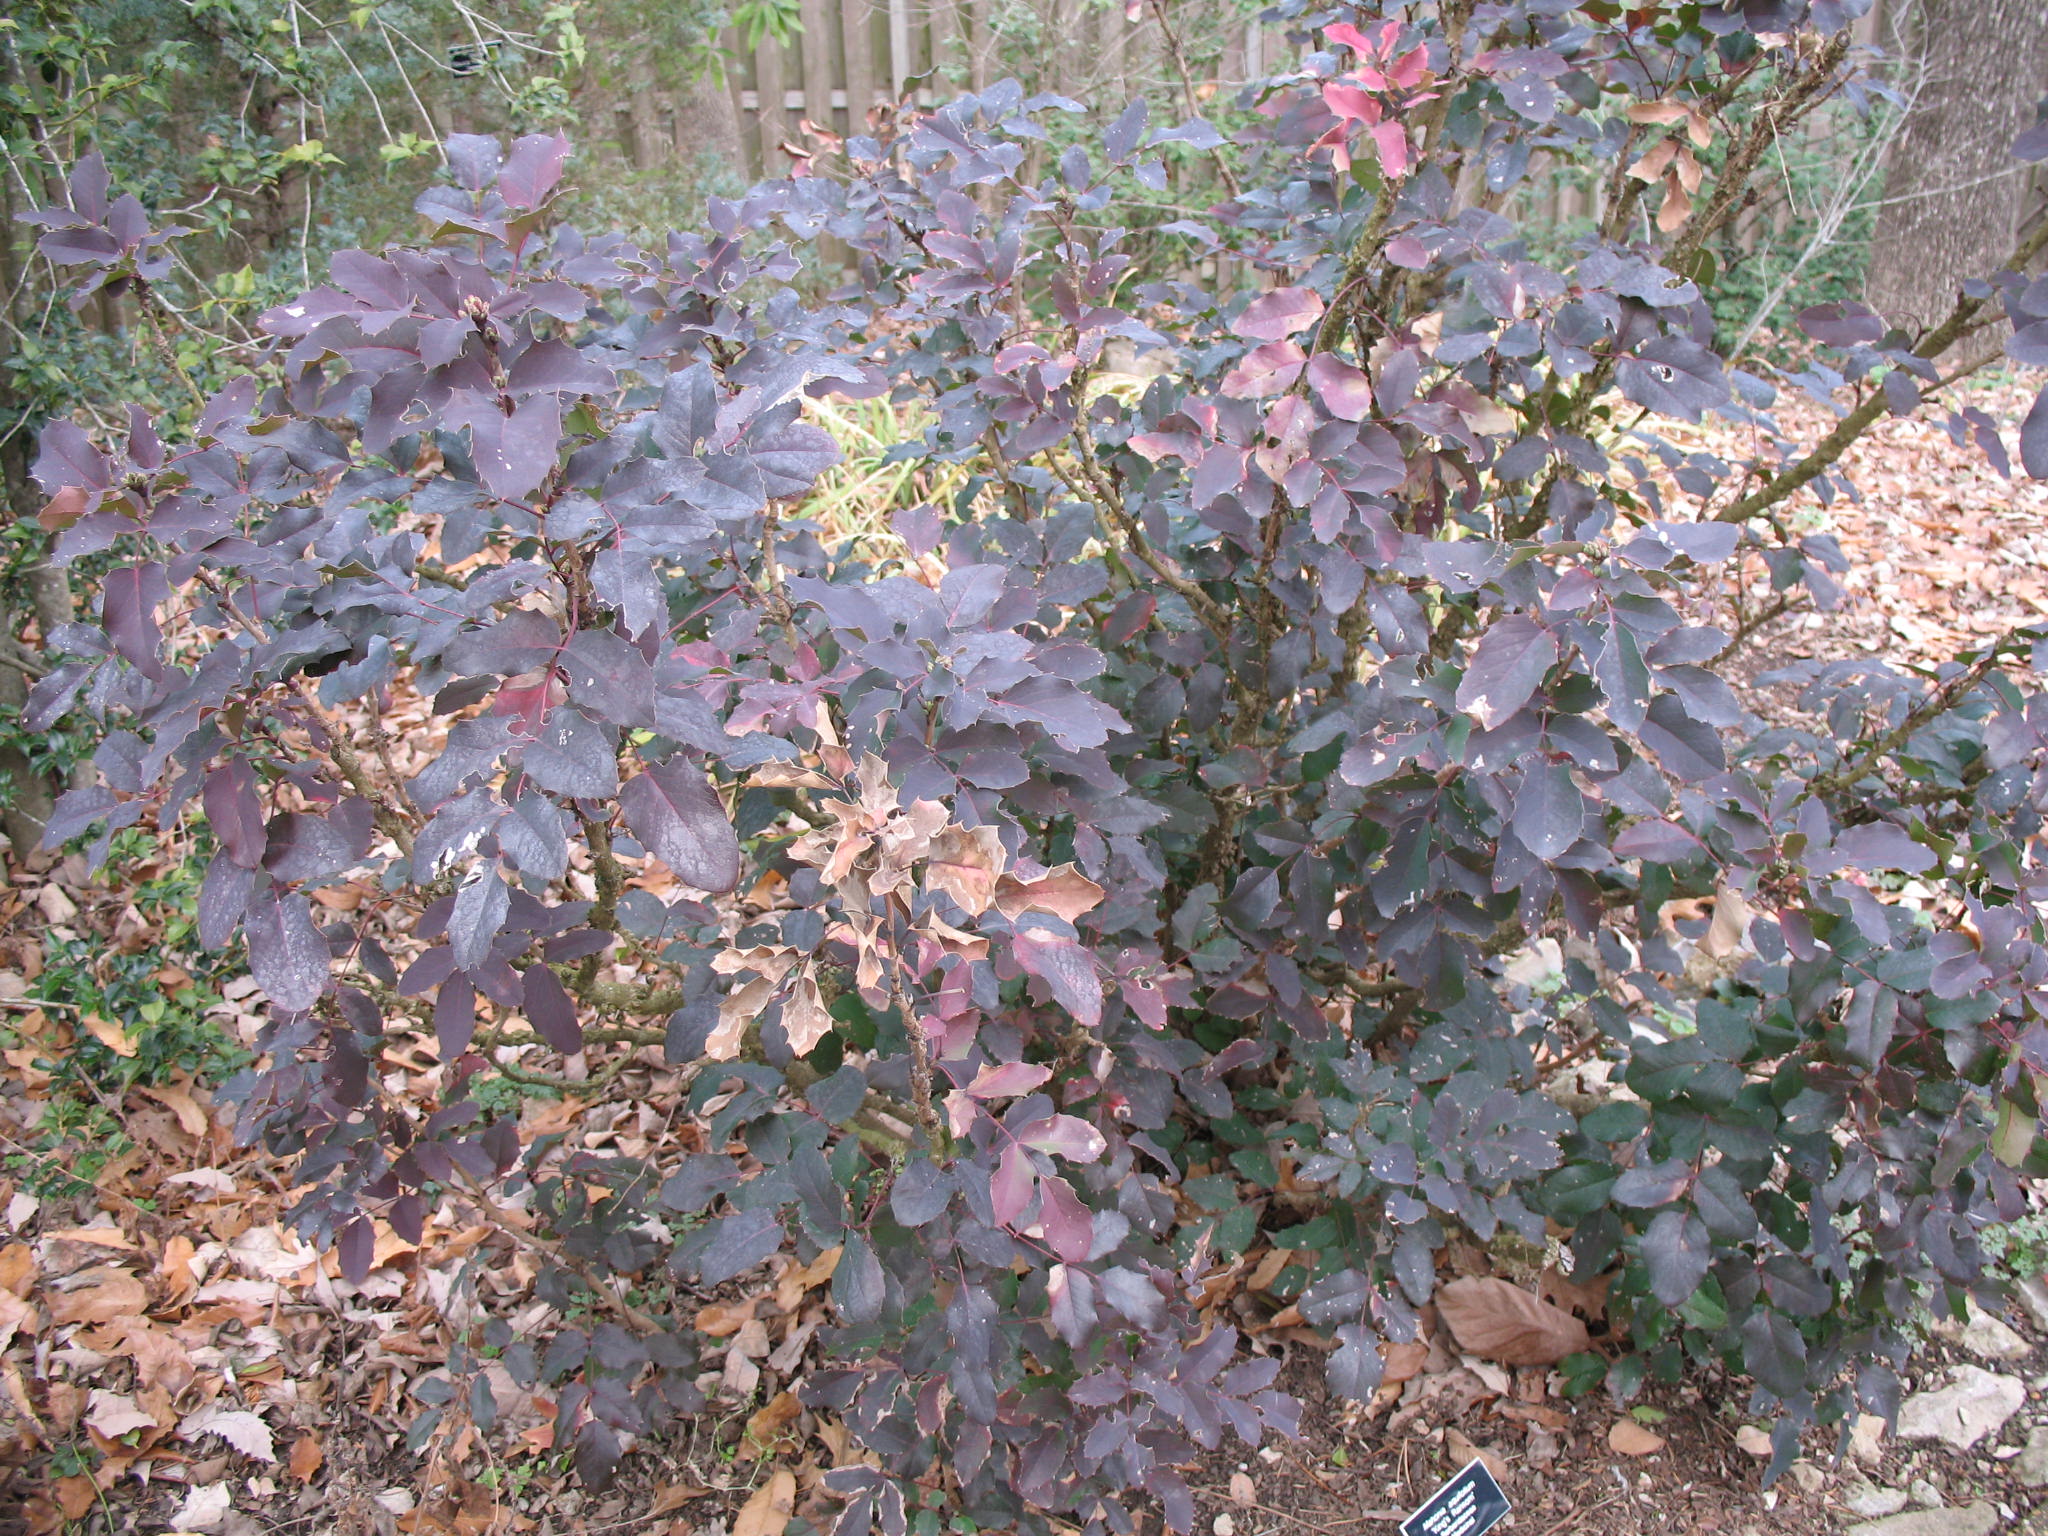 Mahonia aquifolium 'King's Ransom' / King's Ransom Oregon Grape